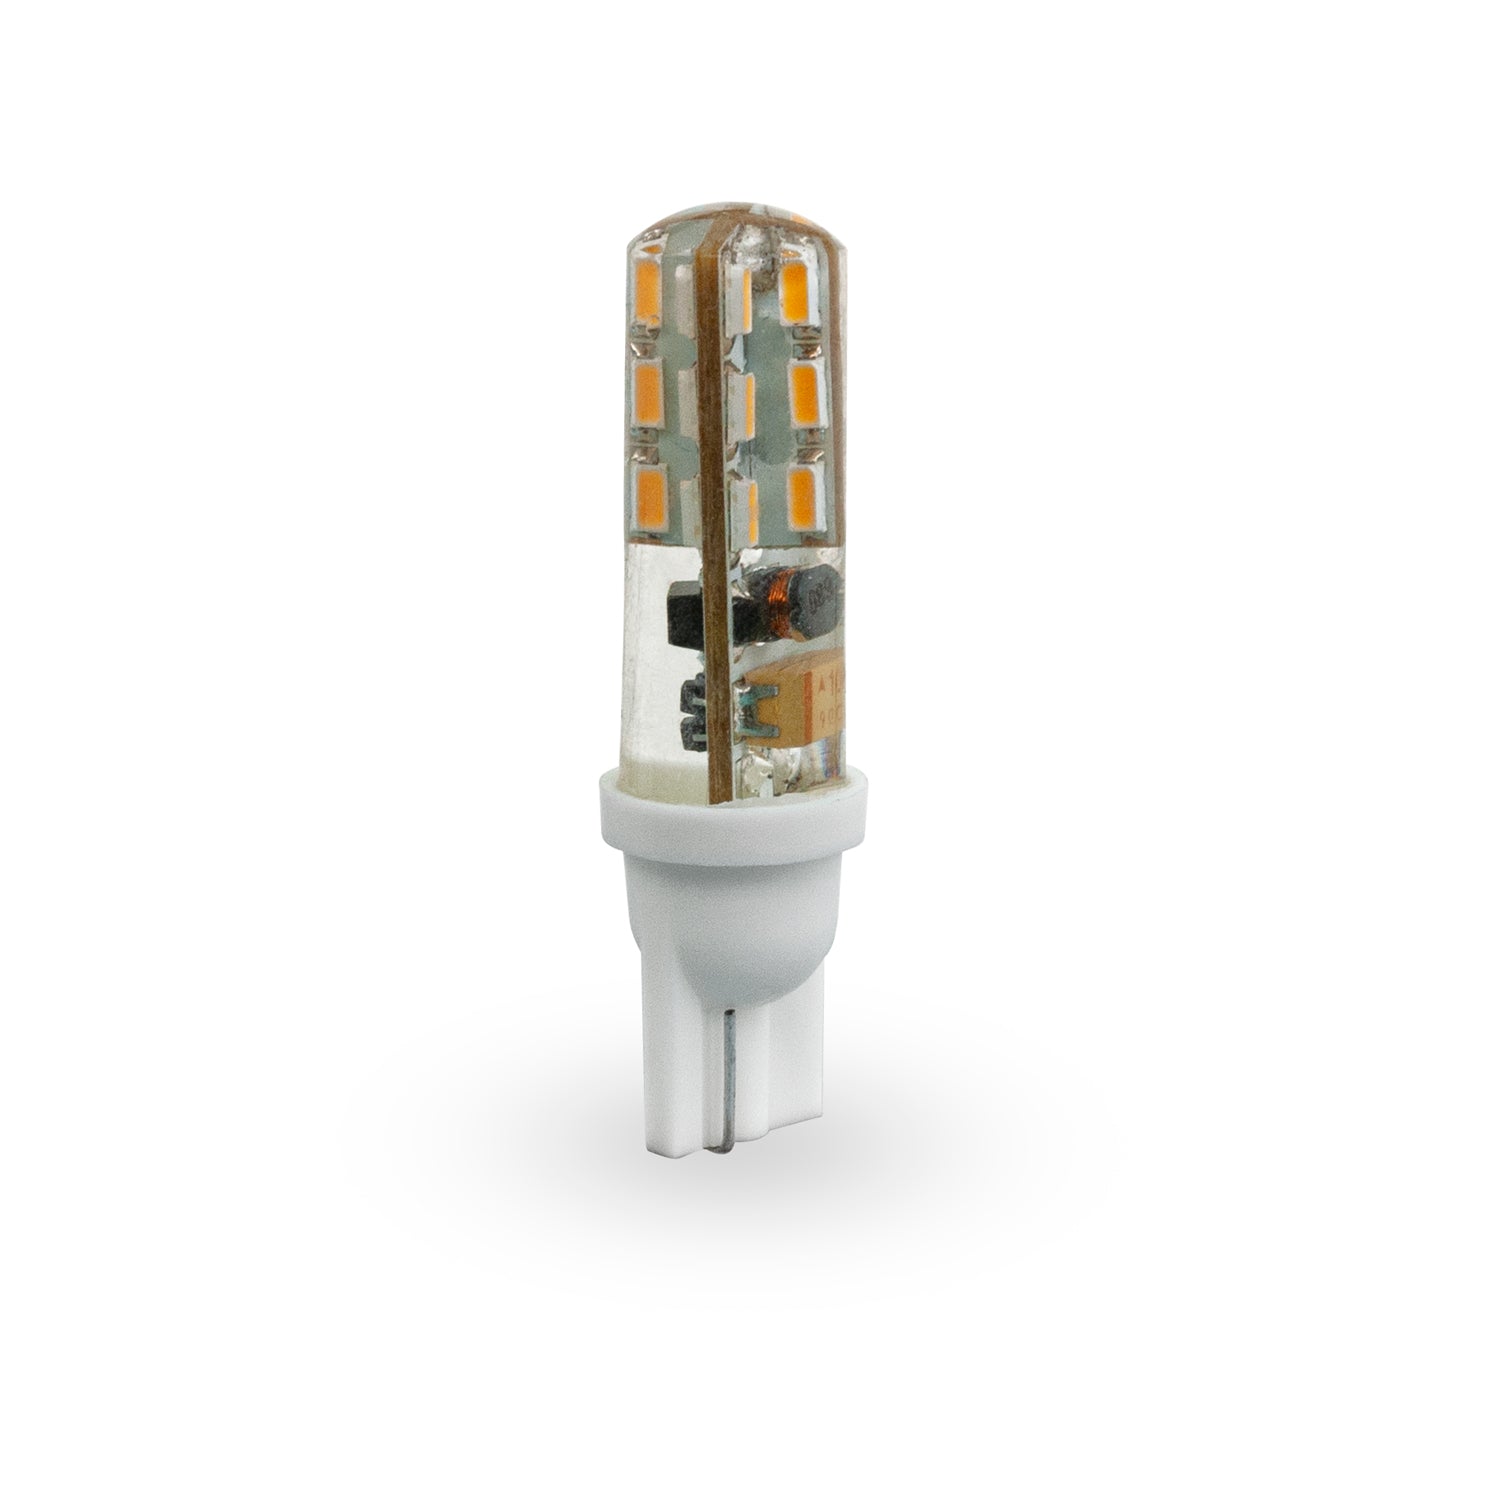 1W 12V T5 Wedge LED 3000K 180 Degree Bulb by Kichler at